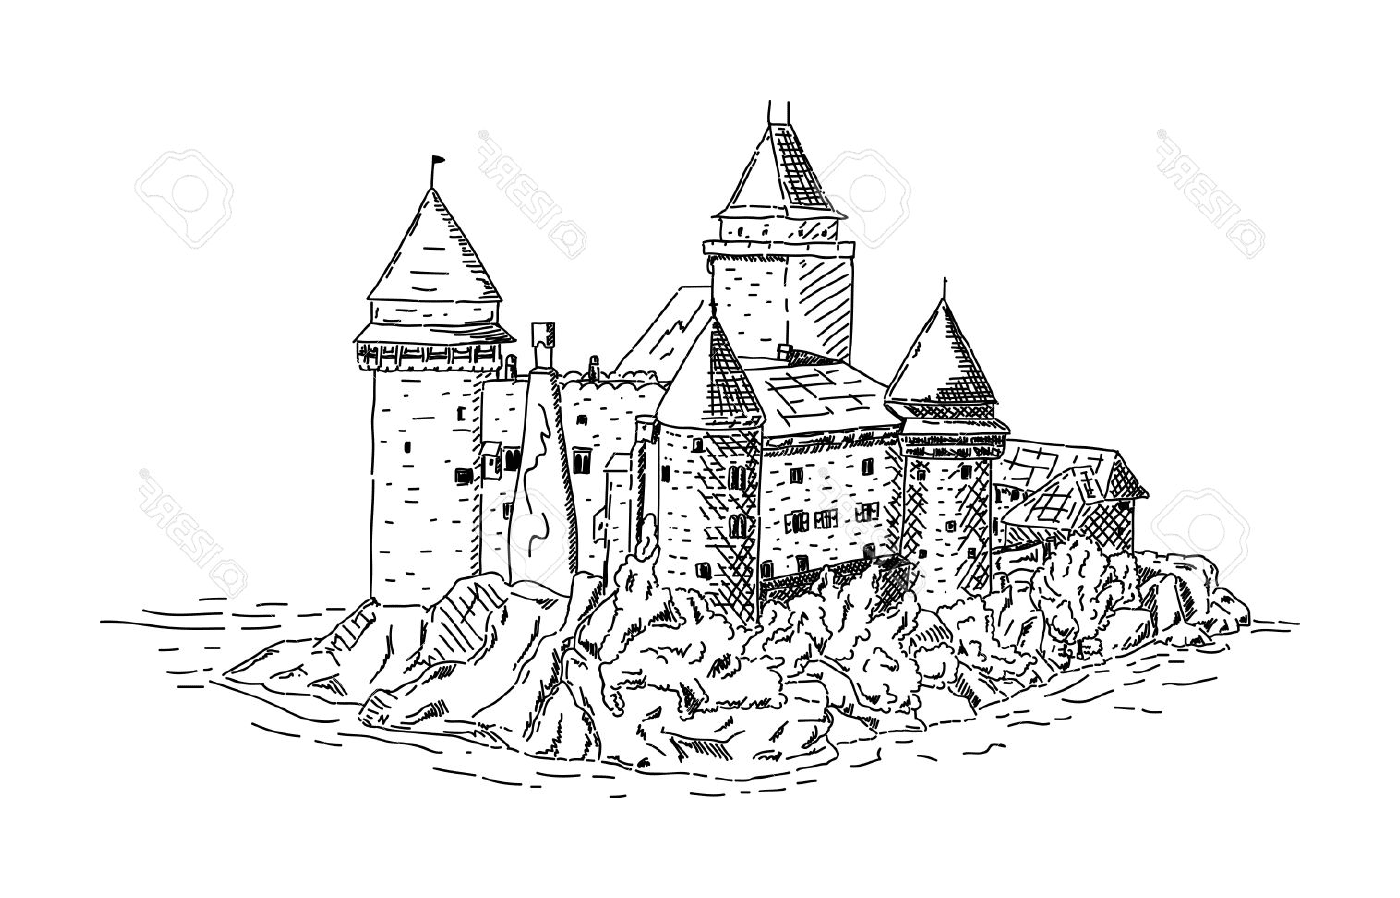  A medieval castle near the sea 